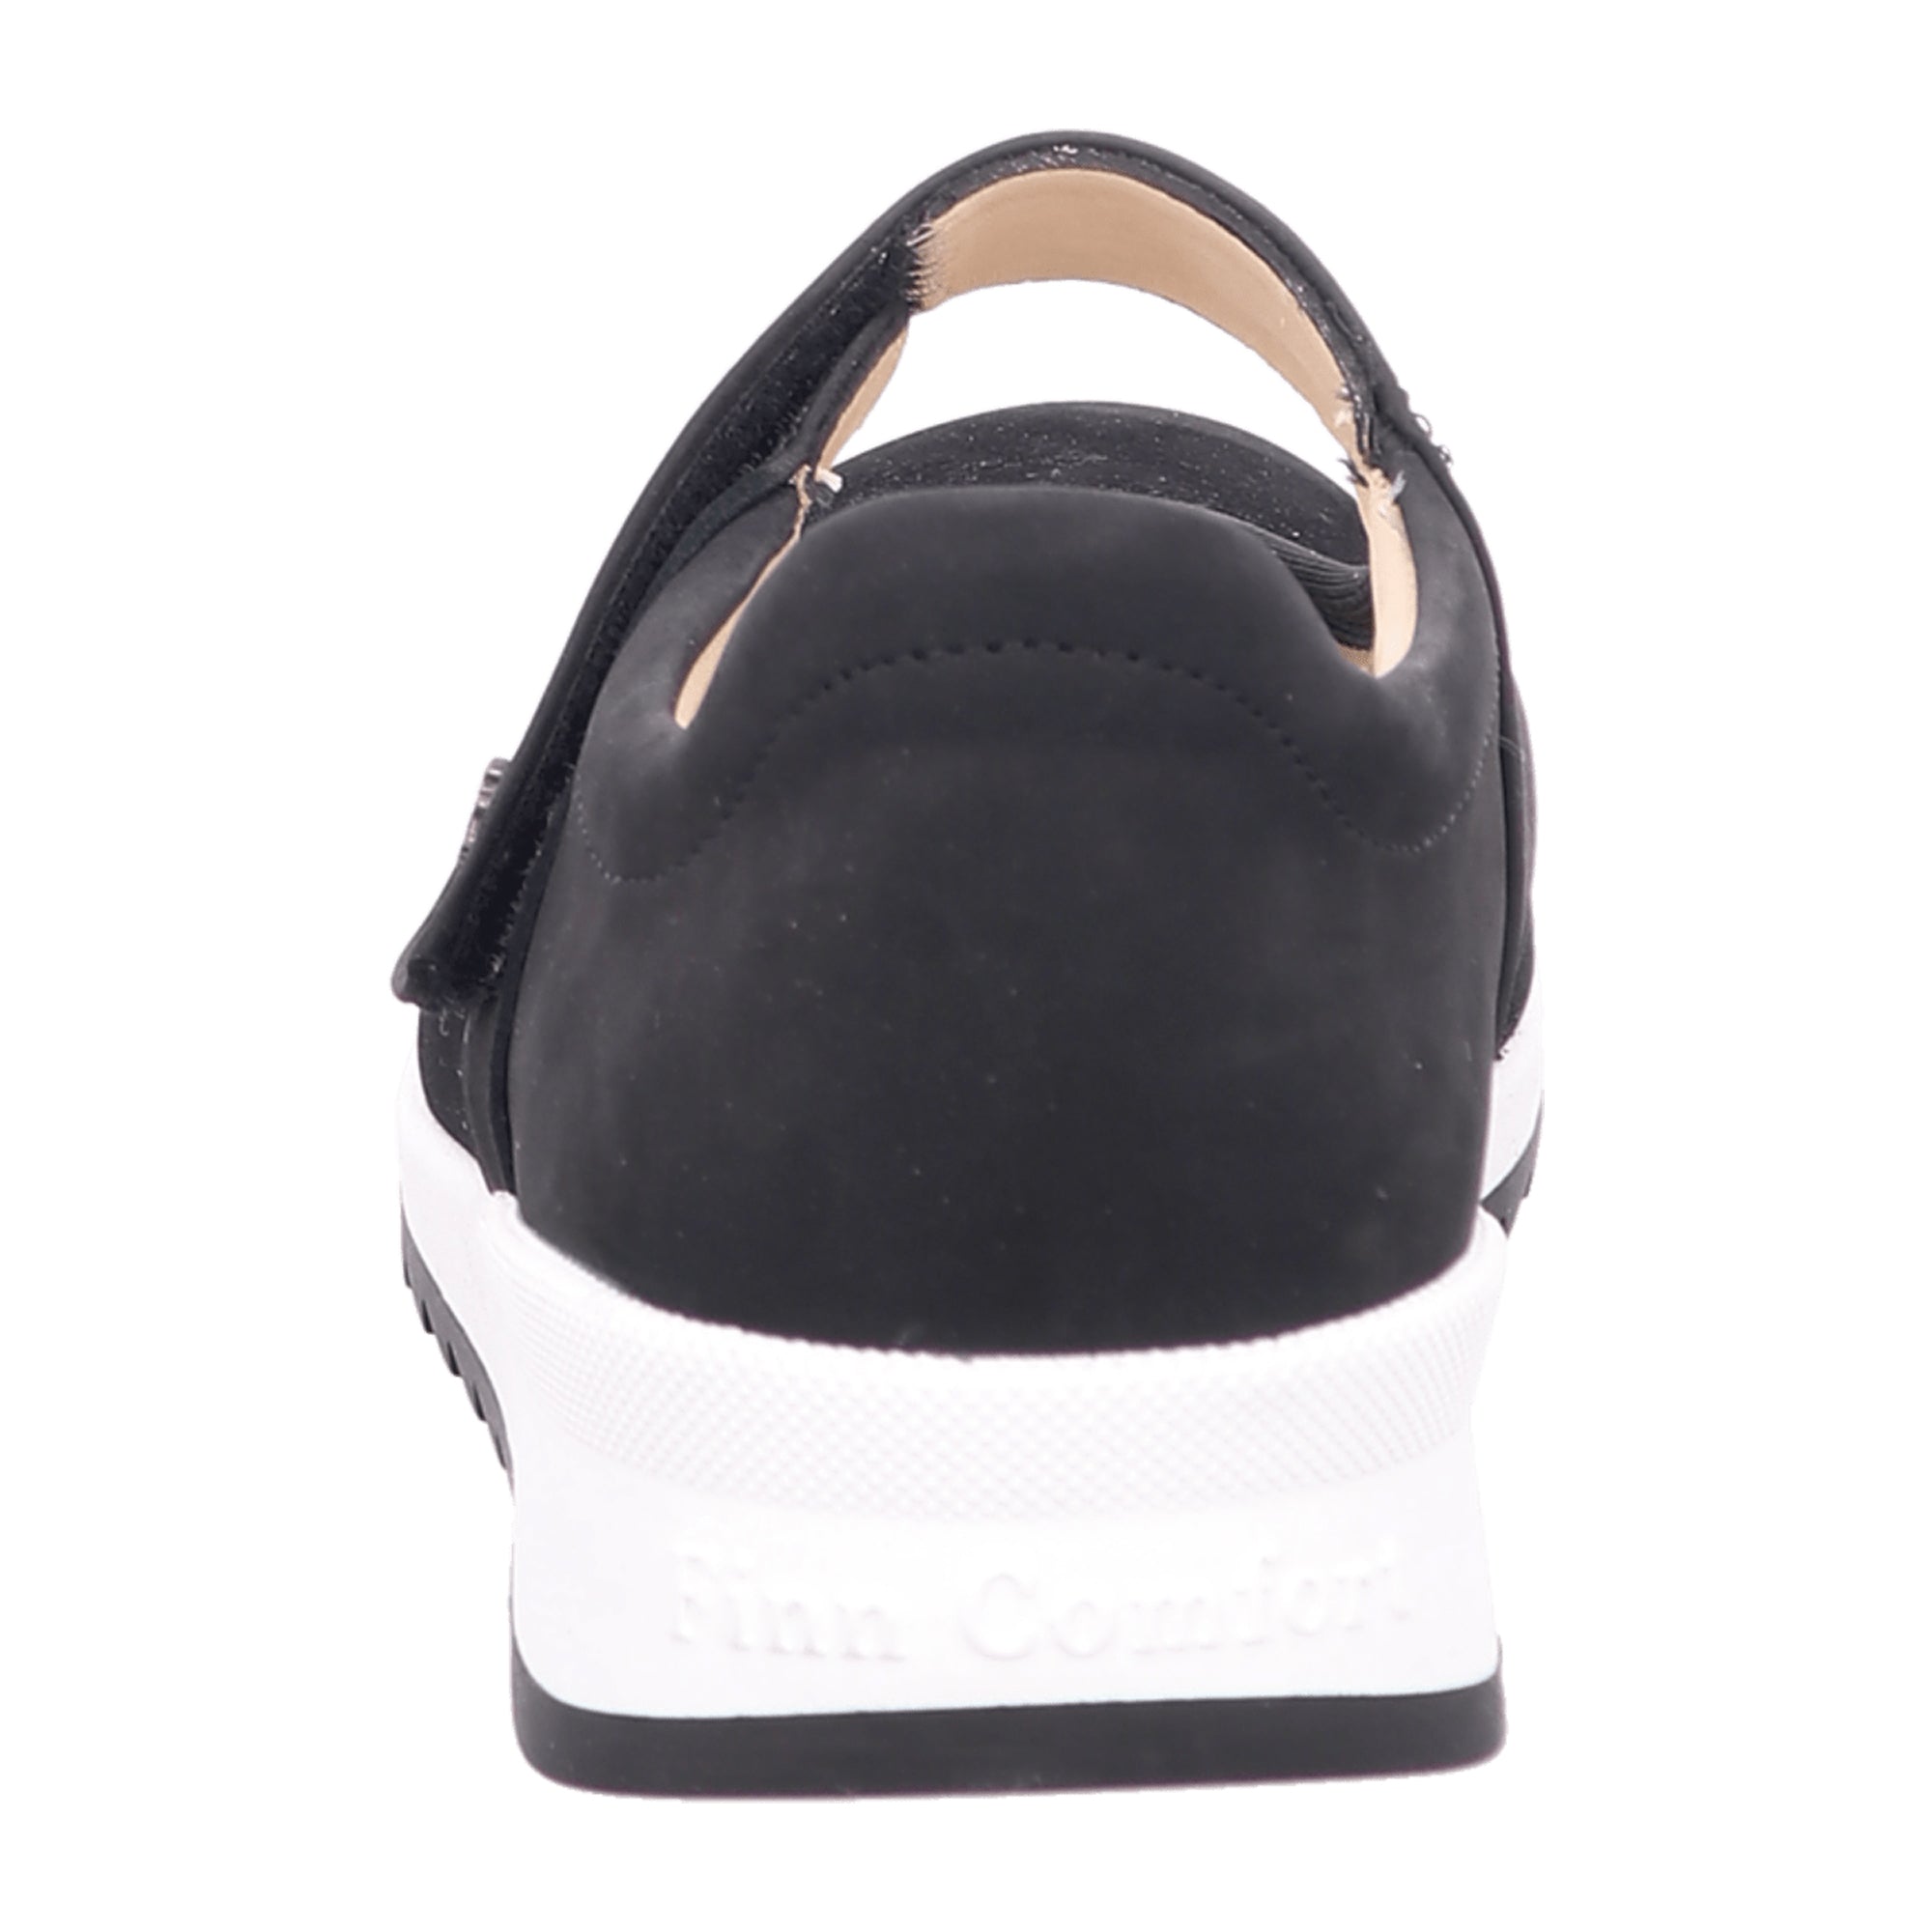 Finn Comfort Assenza Women's Comfort Slipper - Black Balenastretch Nubuck Leather